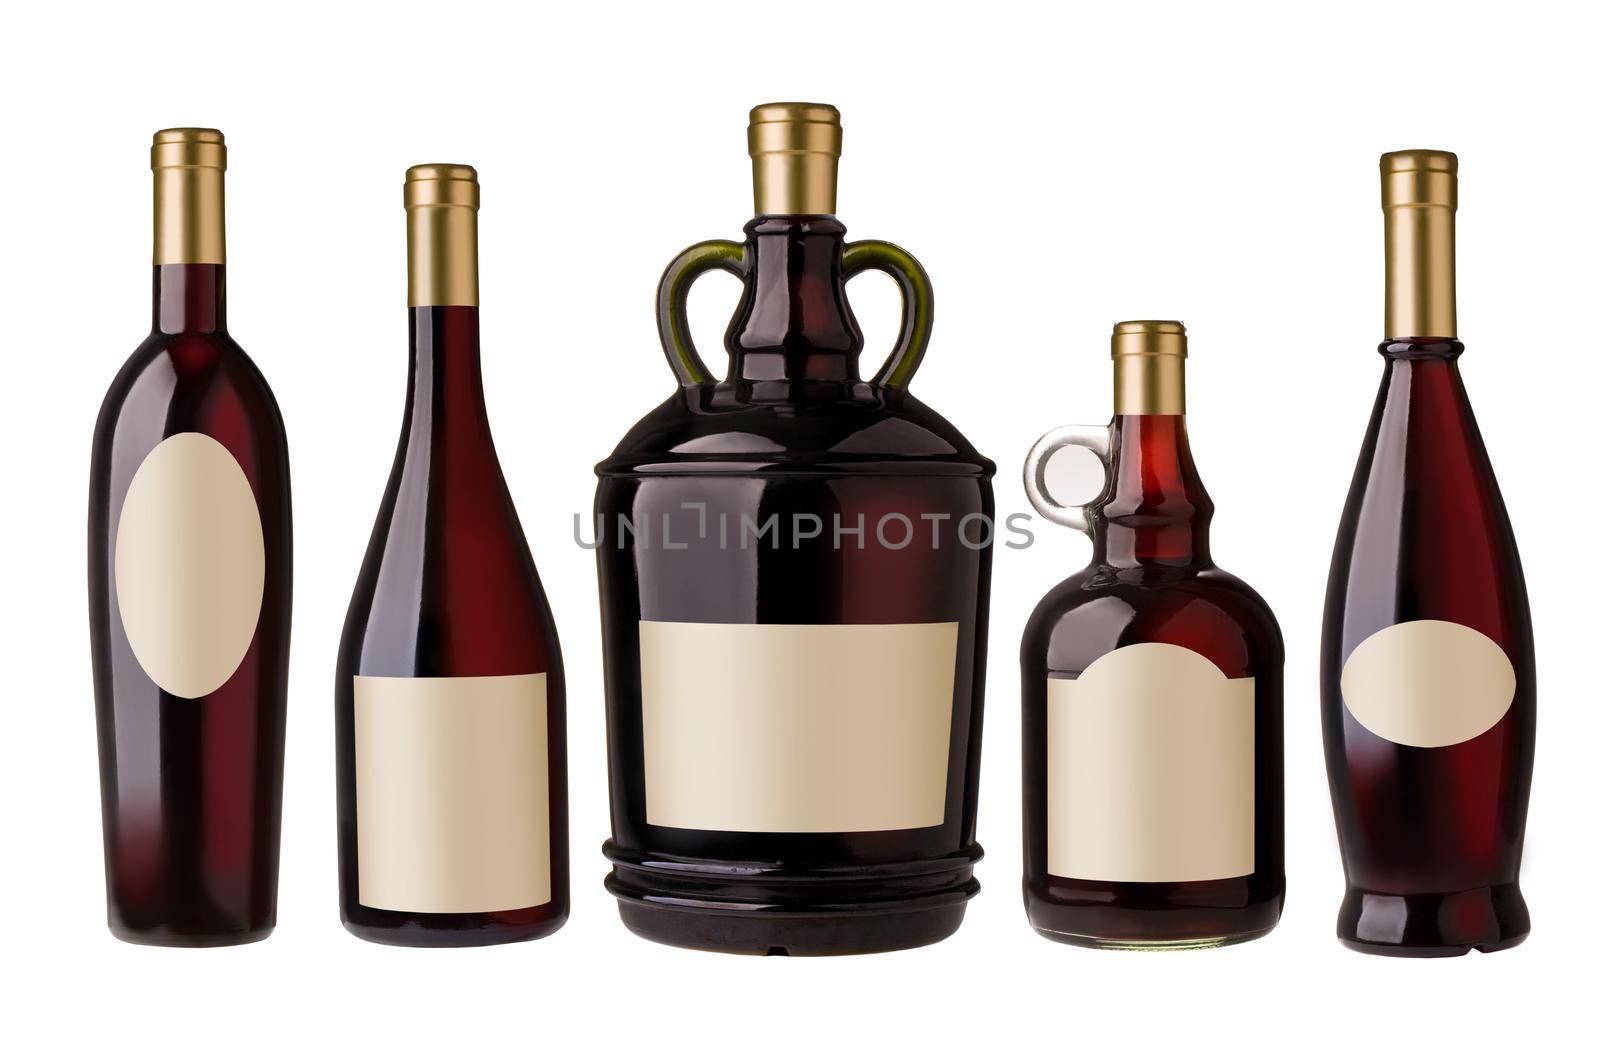 wine bottles with labels by kornienko